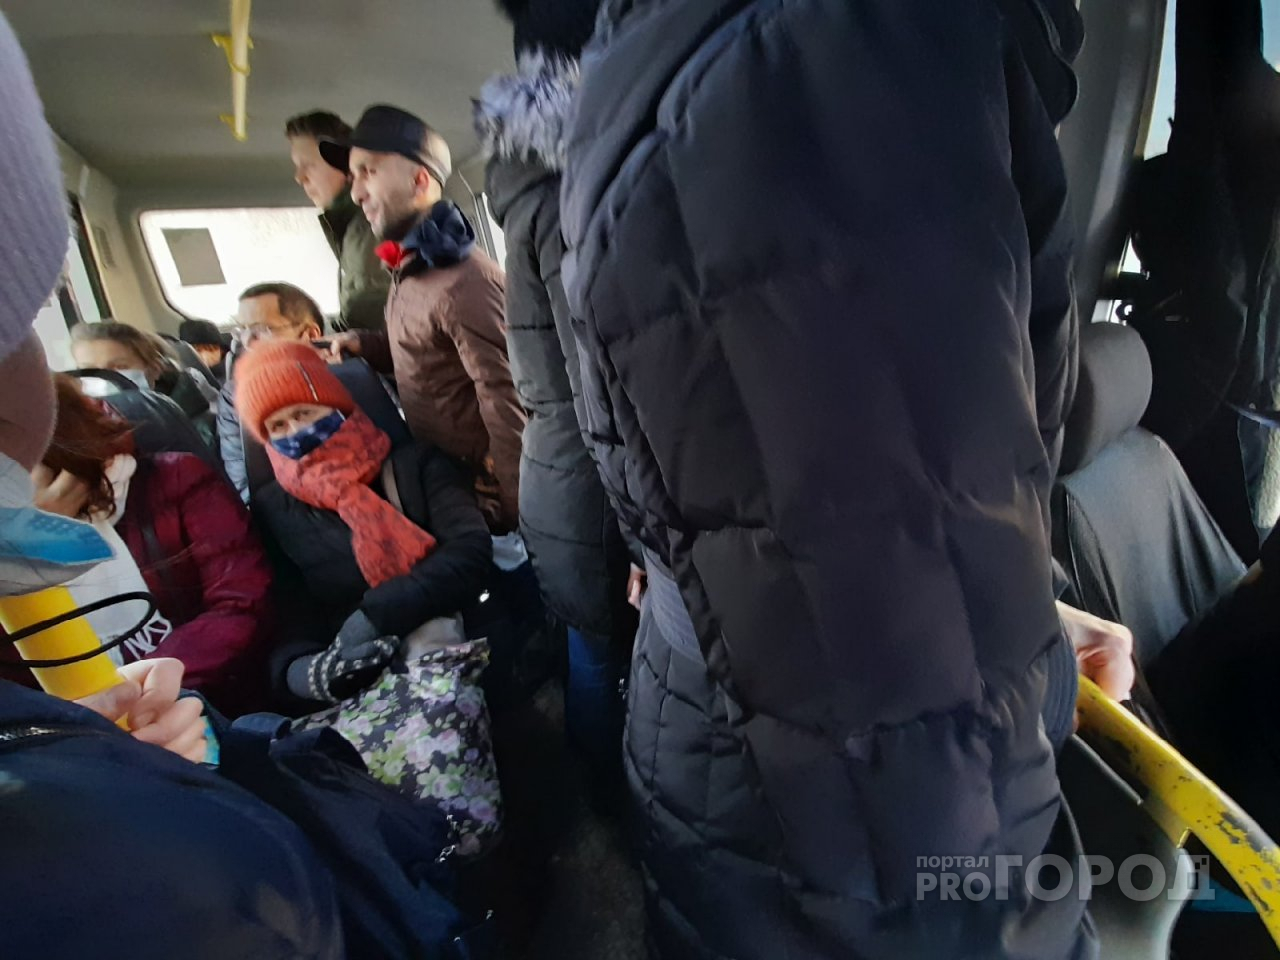 "Сократят и набьют битком": о крахе автобусов в Ярославле рассказали в цифрах